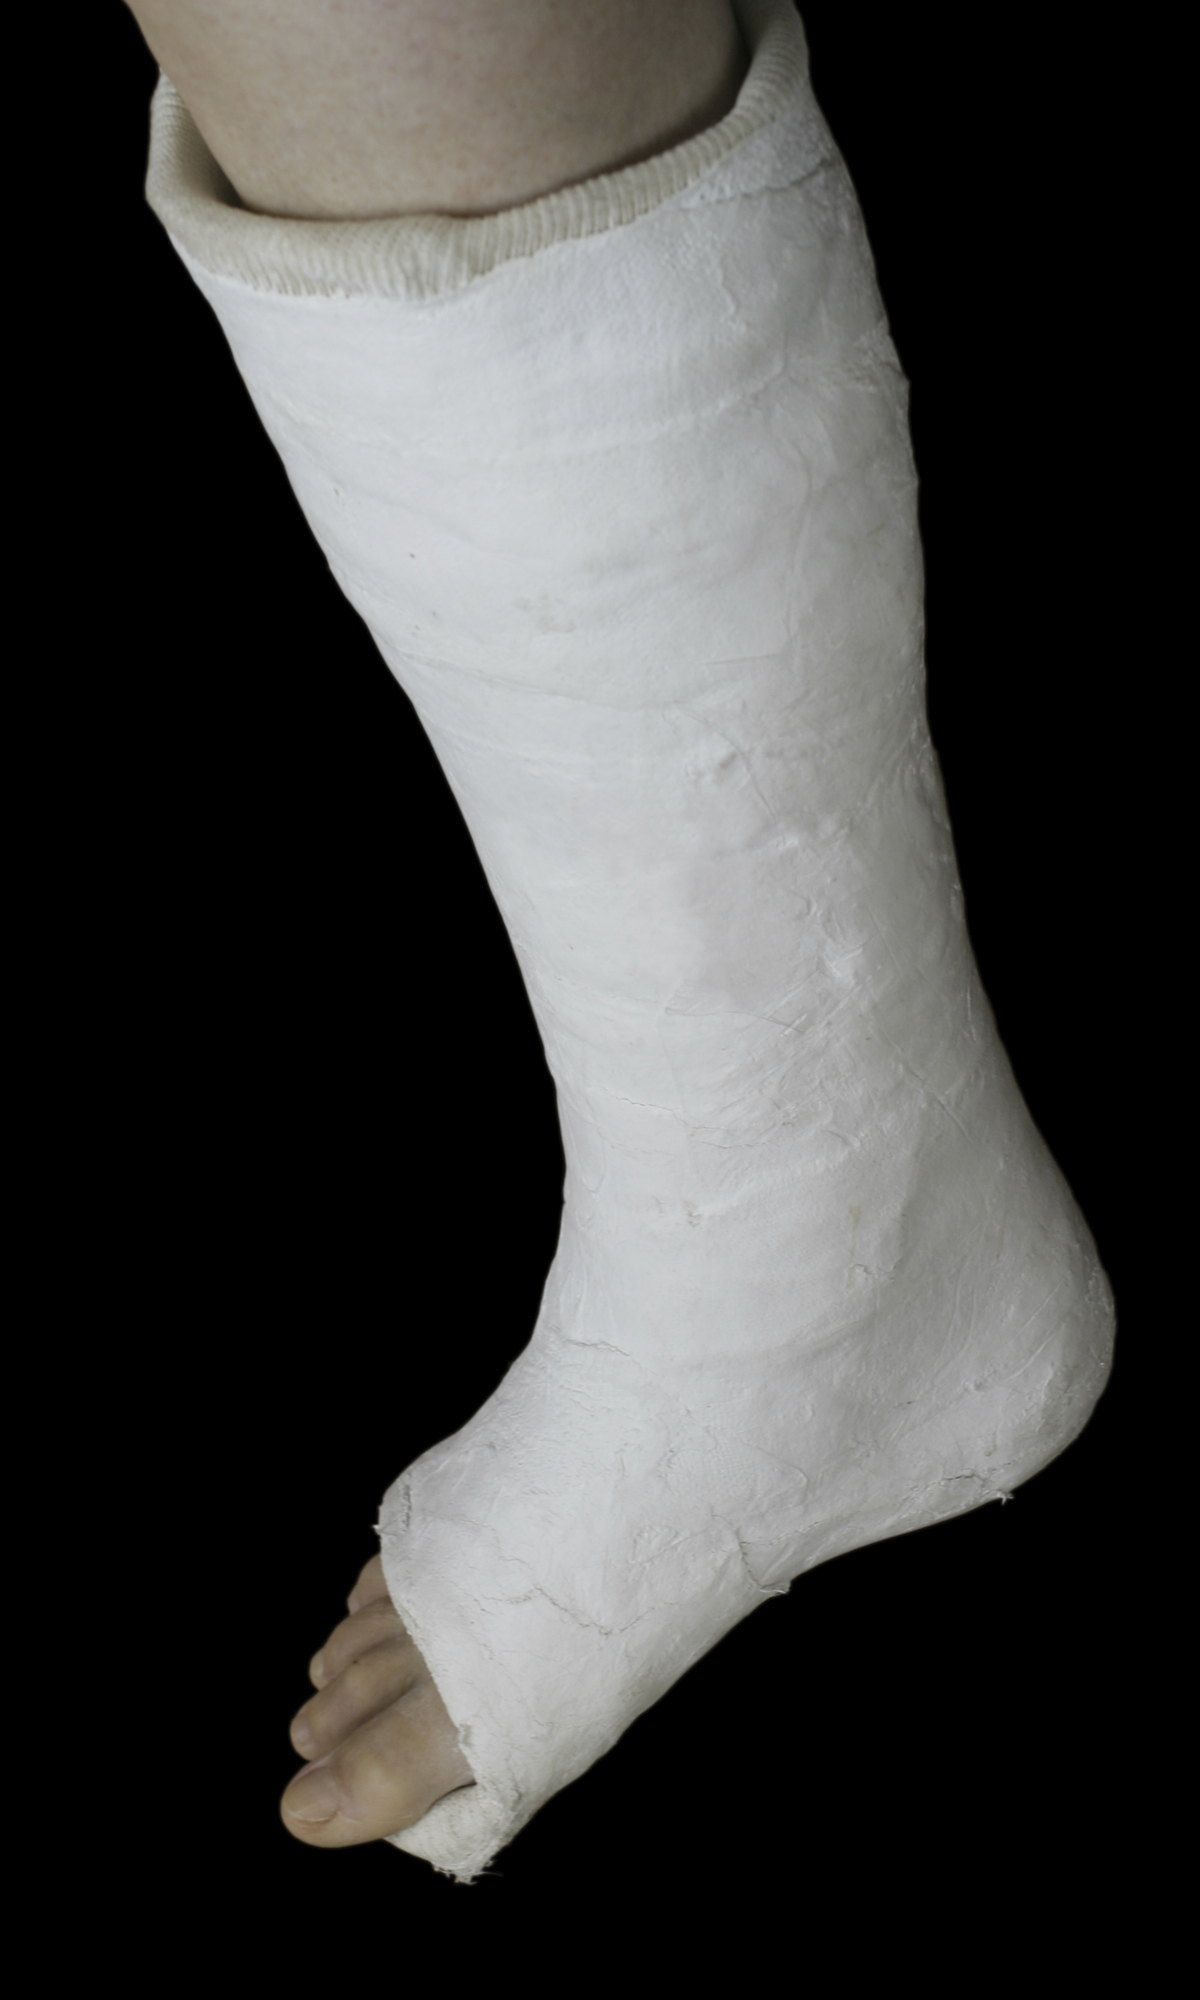 Sever's Disease (Heel Pain) - OrthoInfo - AAOS